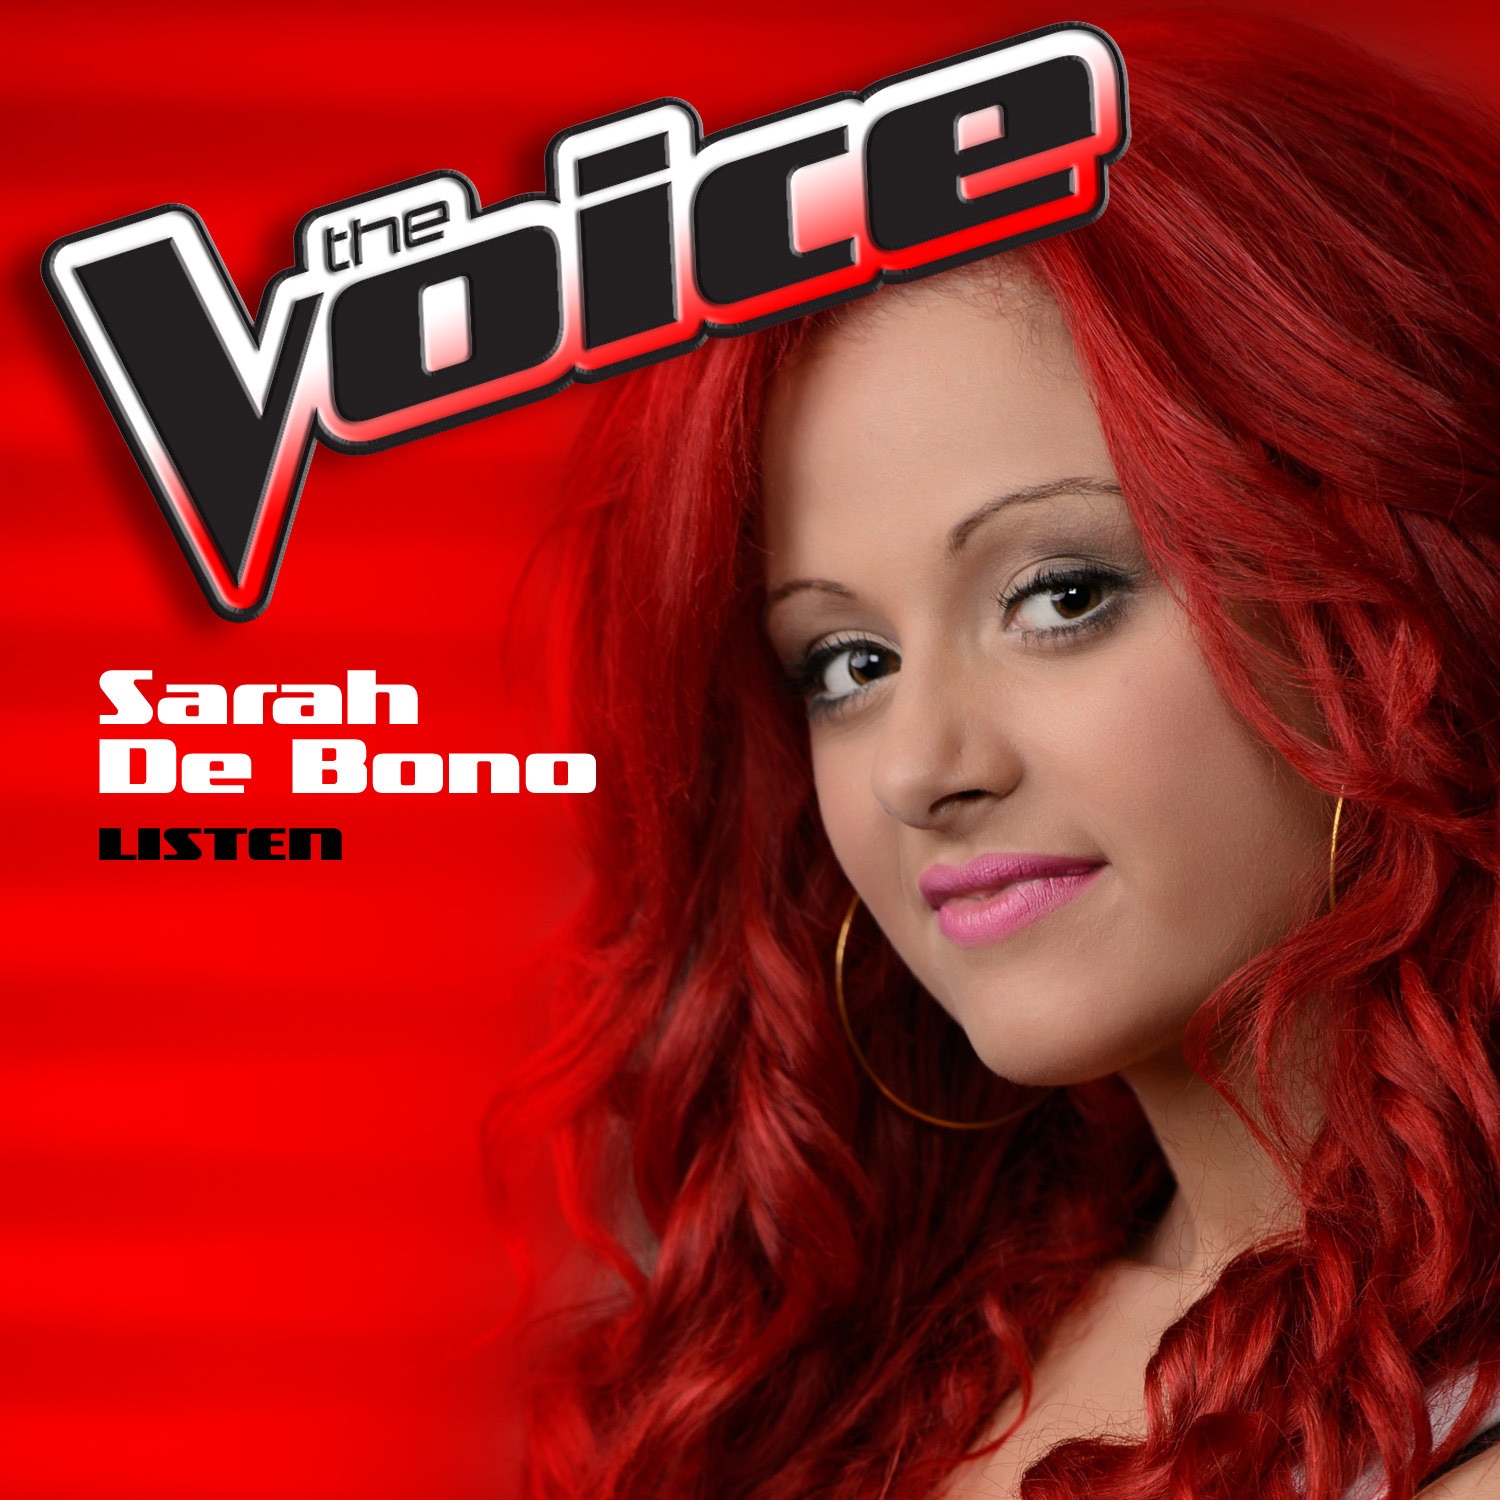 Sarah De Bono — Listen (The Voice Performance) cover artwork